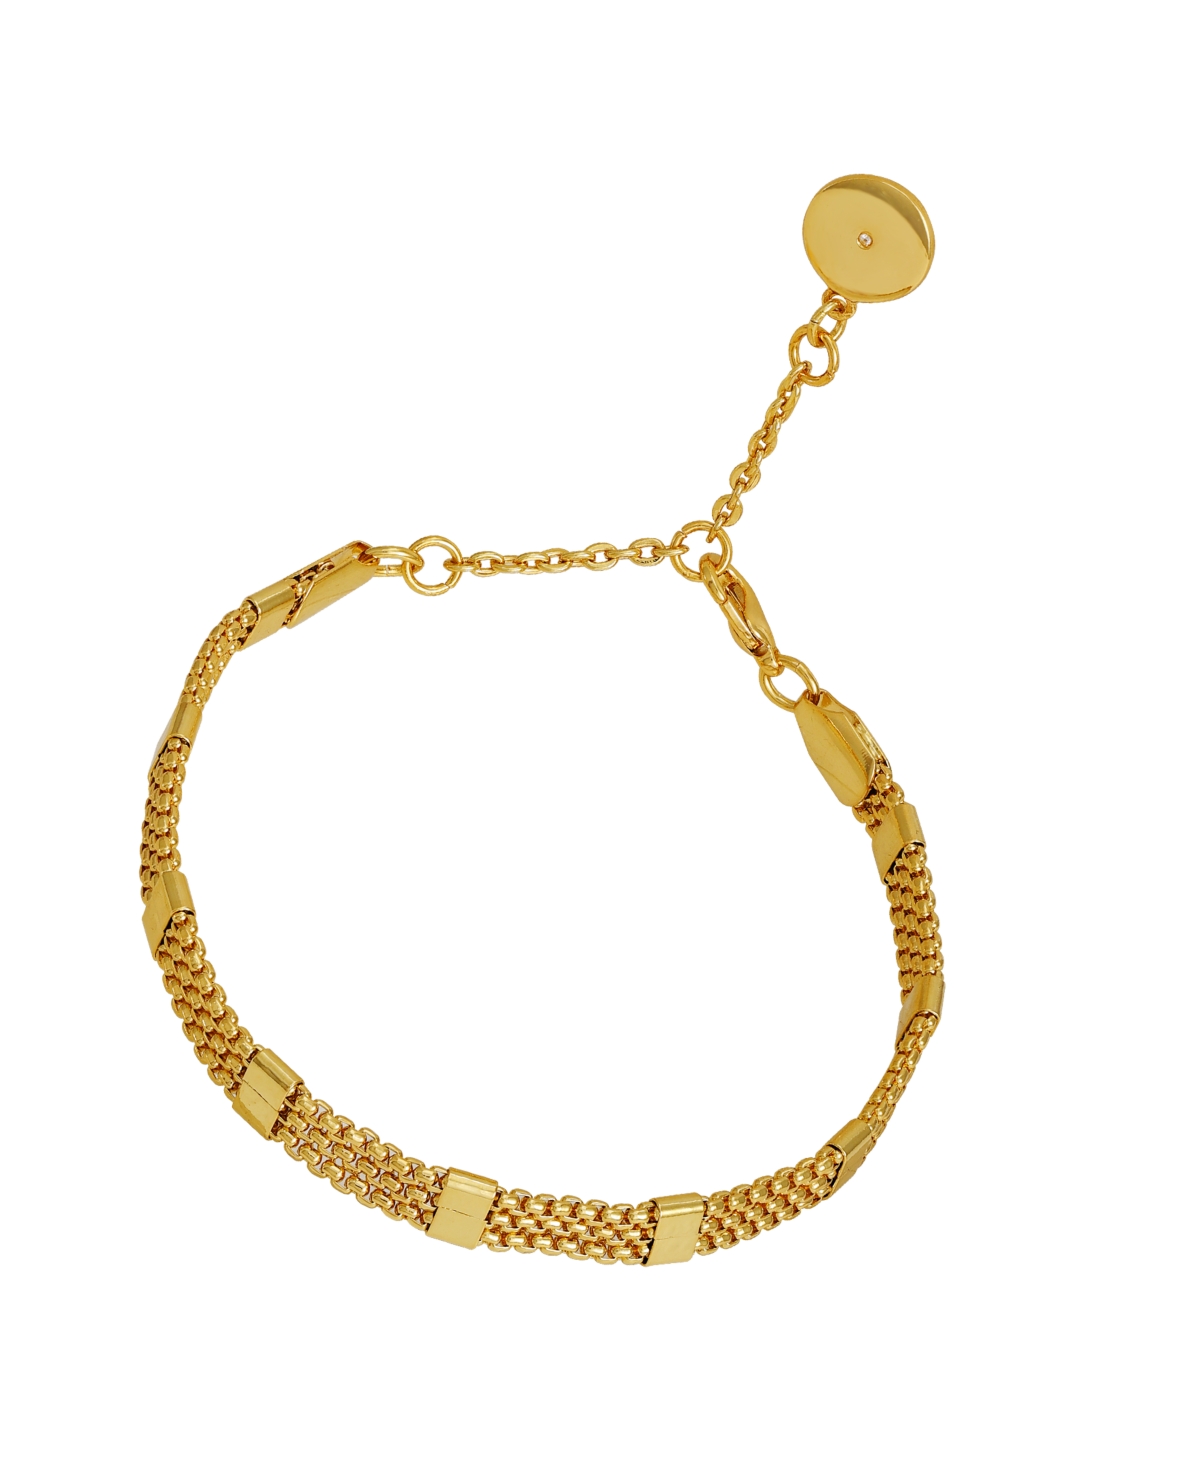 Vince Camuto Gold-tone Box Chain Bracelet, 7.5" + 2" Extender